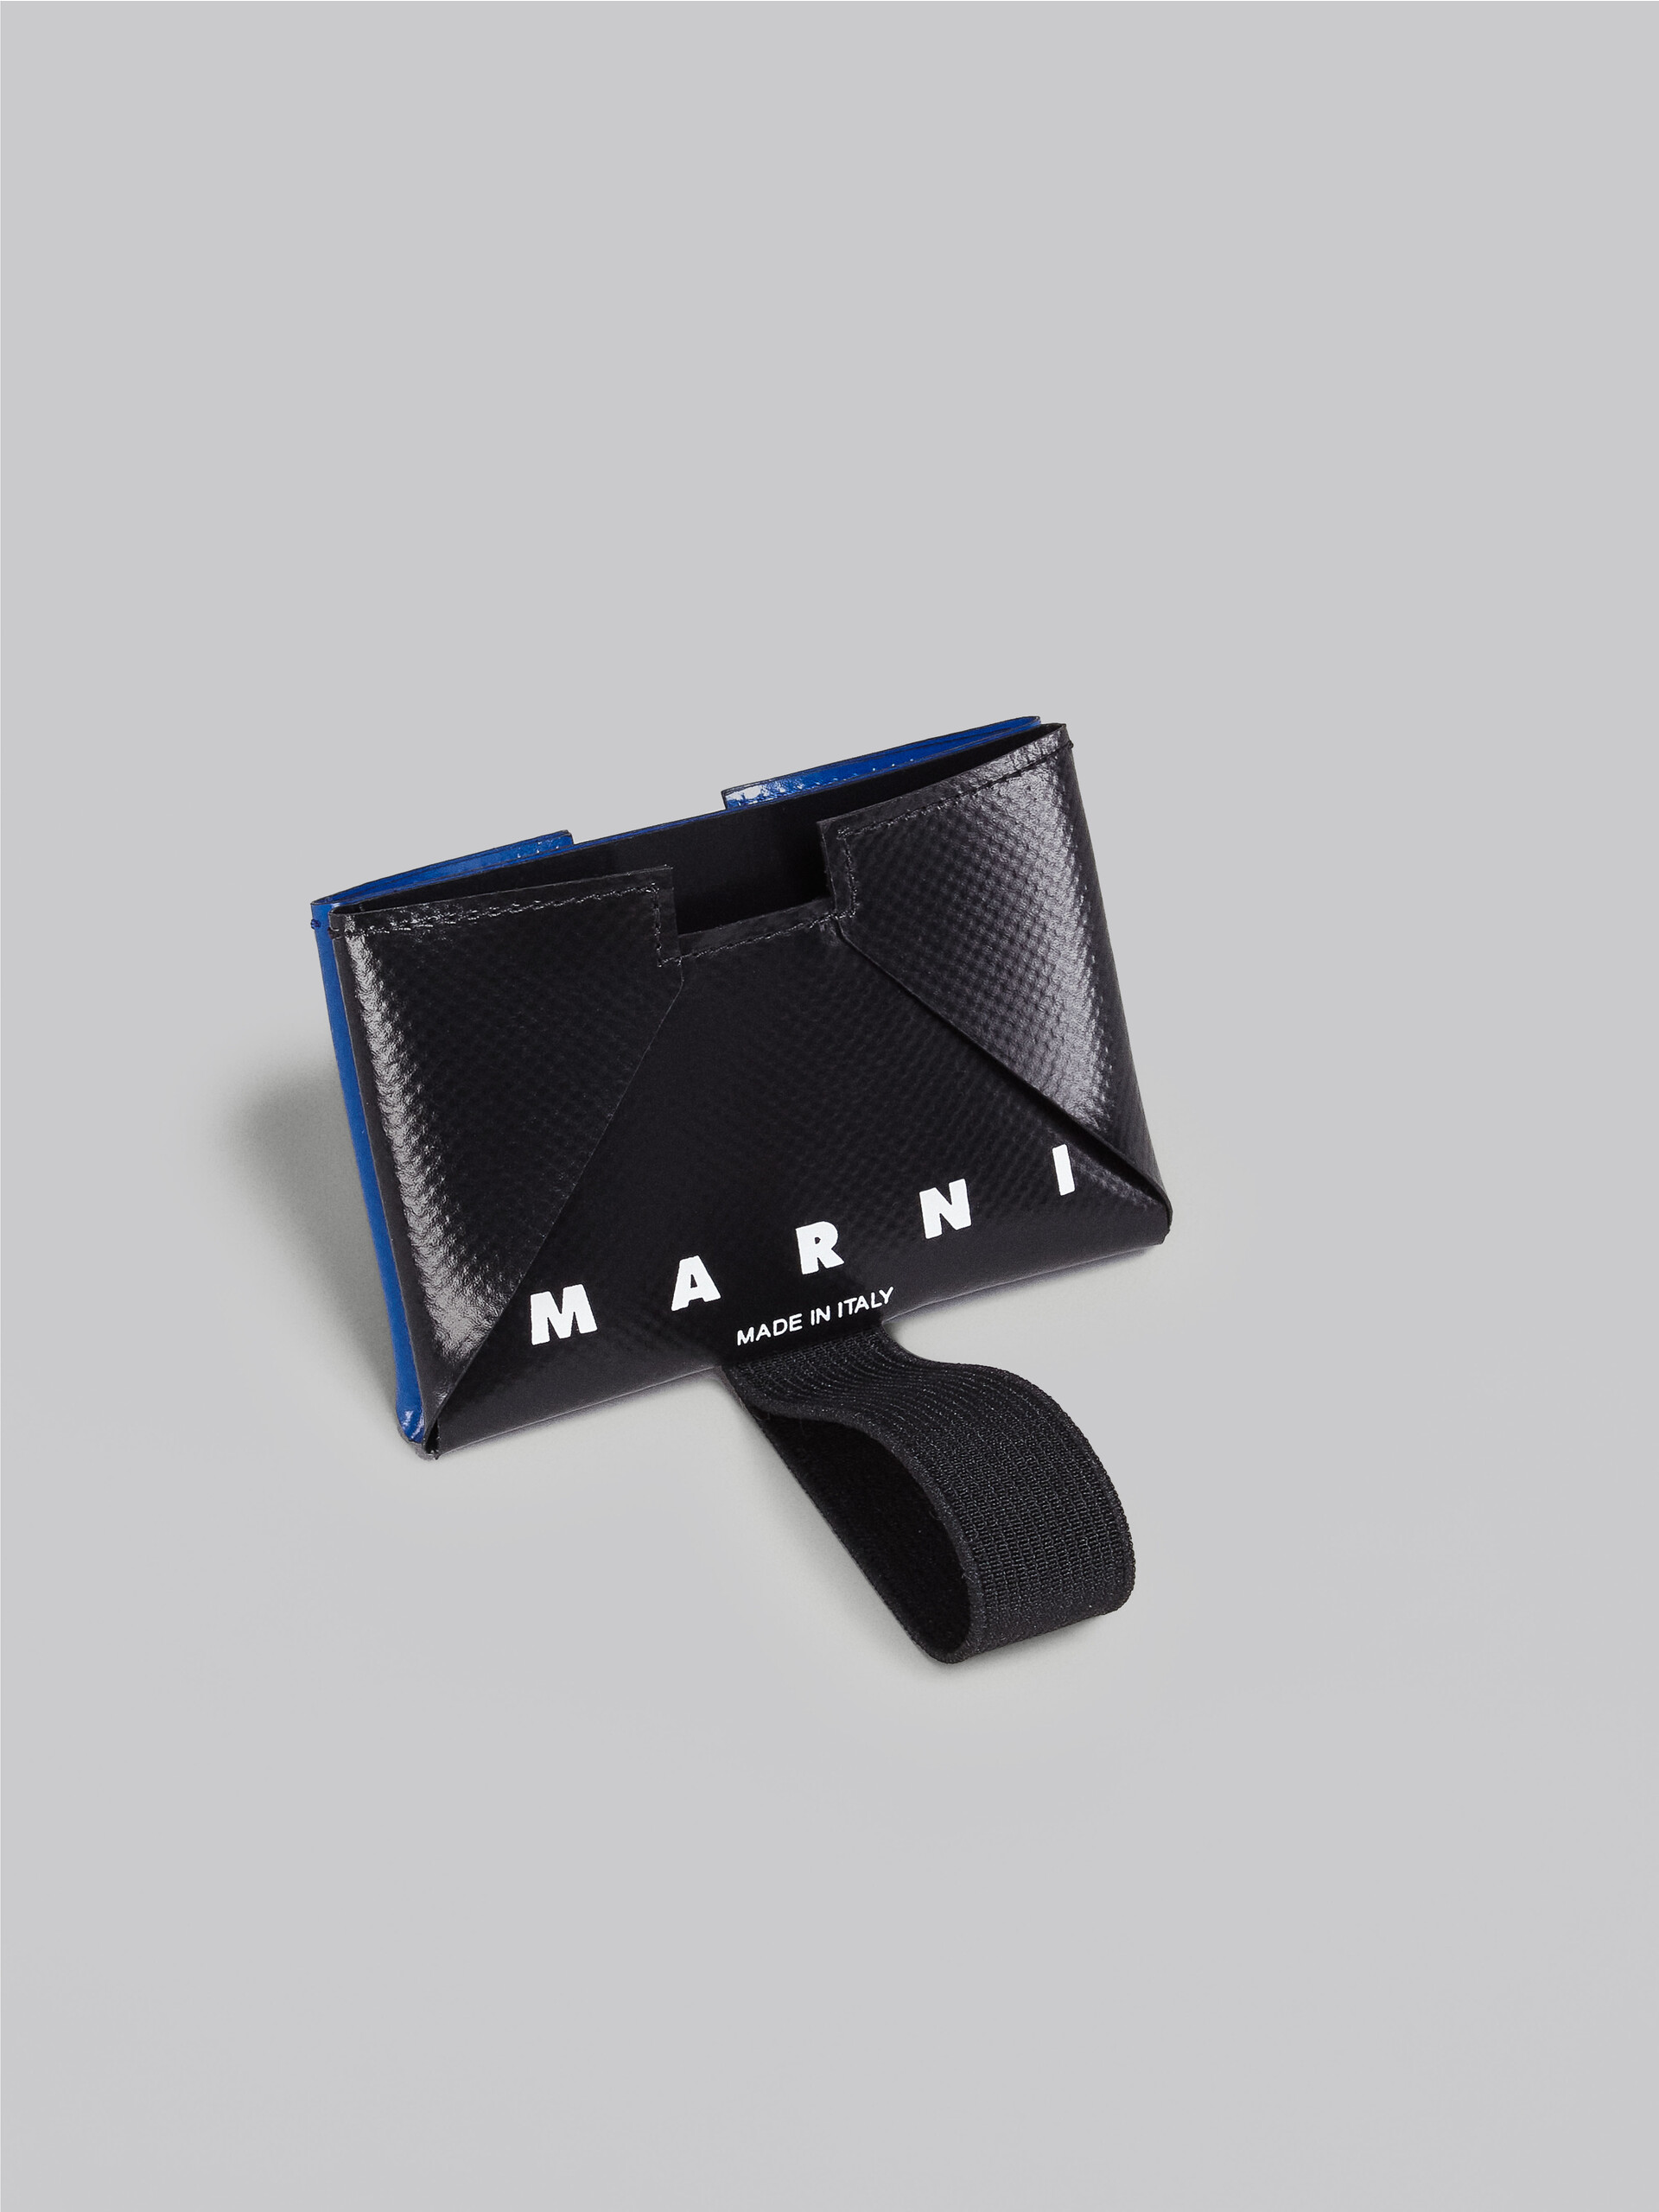 Black and blue credit card case - Wallets - Image 5